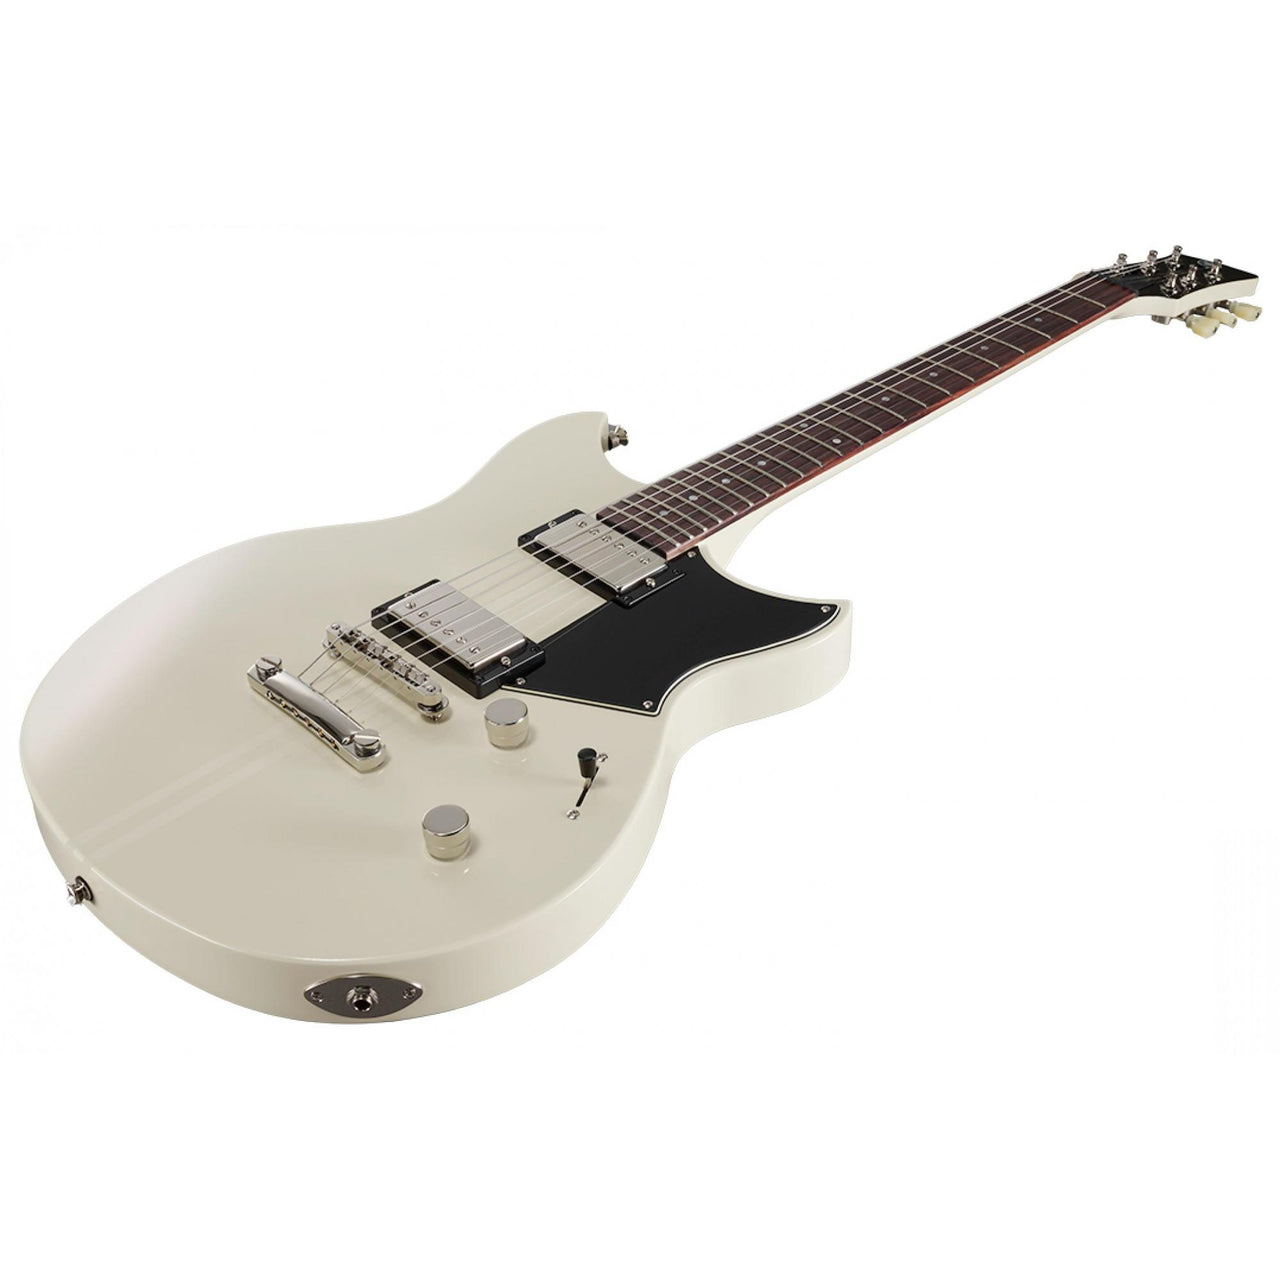 Guitarra Electrica Yamaha Revstar Elemental Blanca, Rse20svw